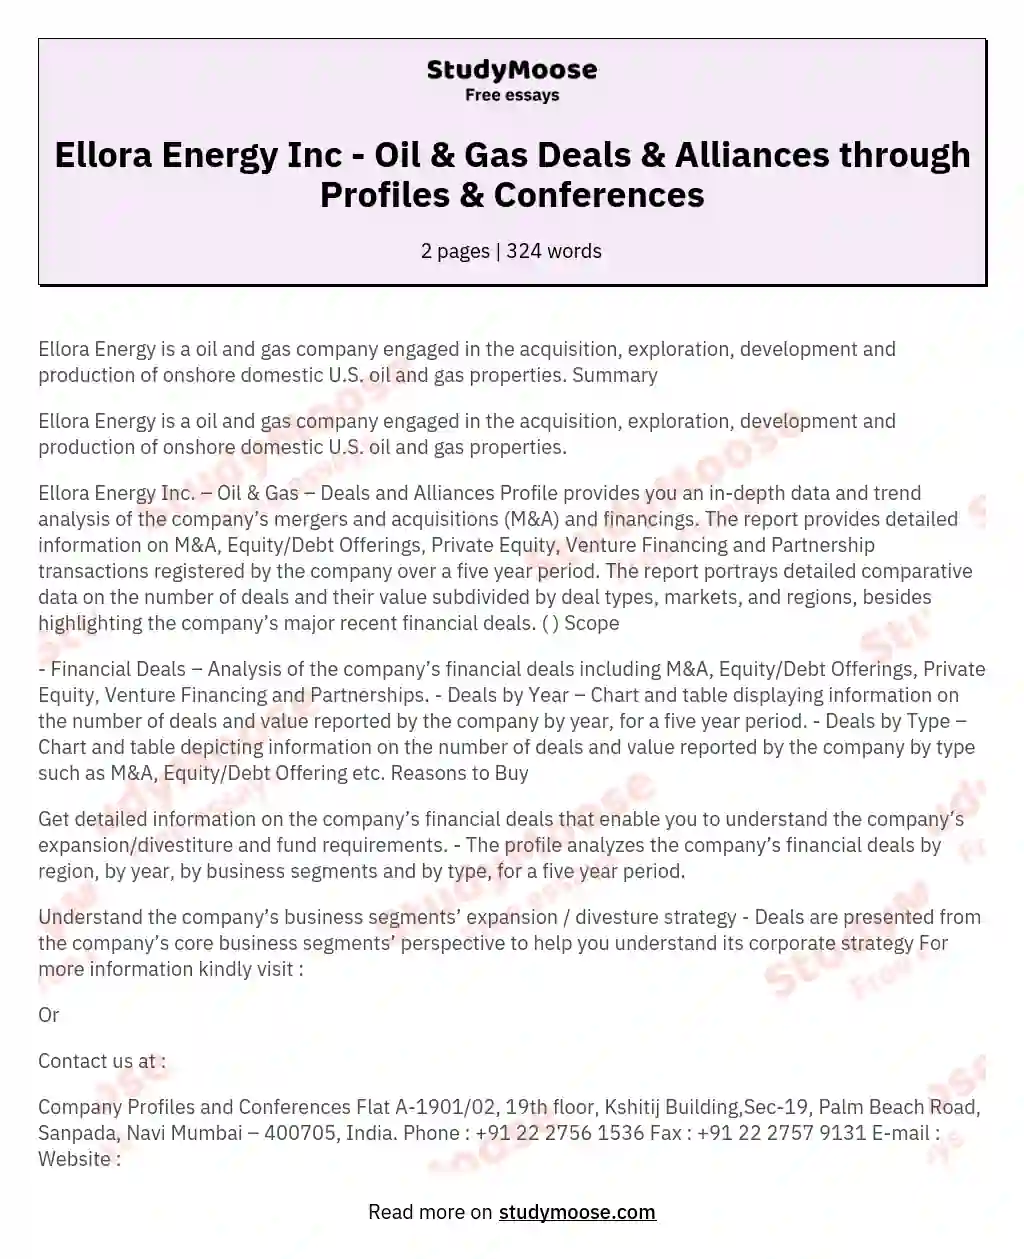 Ellora Energy Inc. – Oil & Gas – Deals and Alliances Profile through company profiles and conferences